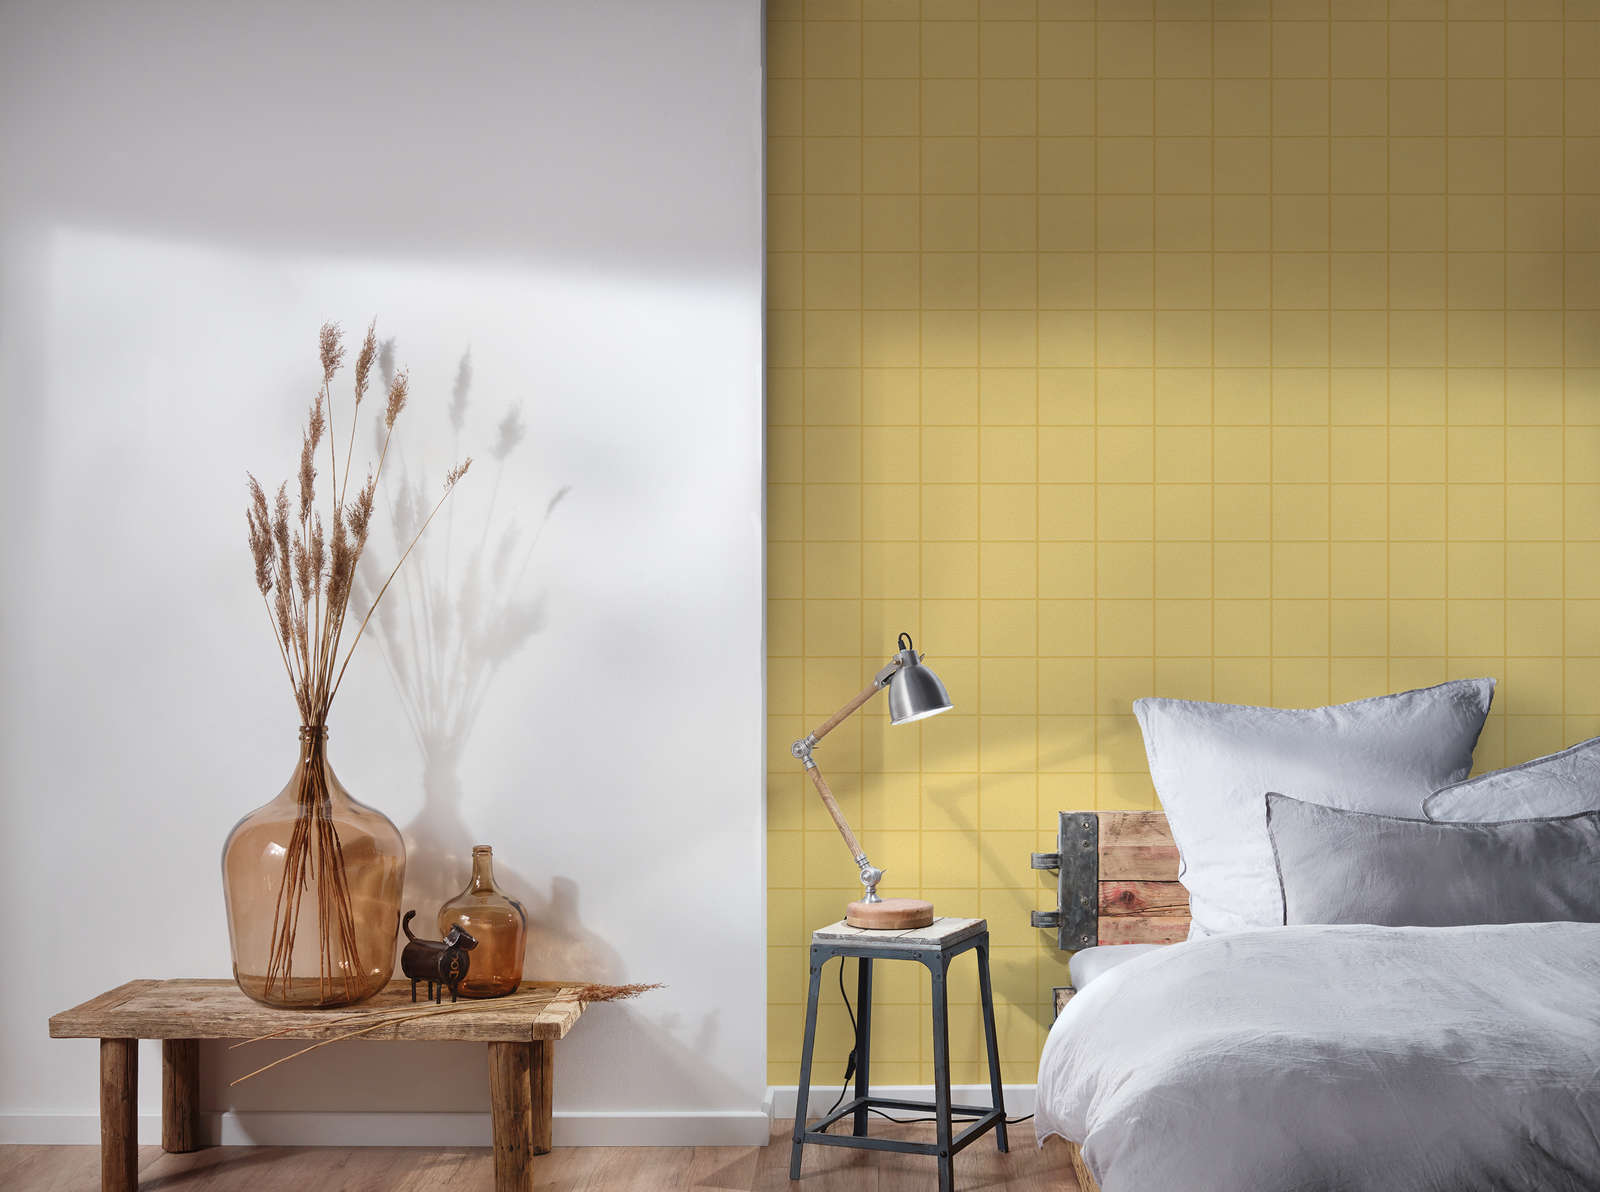             Wallpaper tile pattern, dark joints & 3D effect - gold, yellow
        